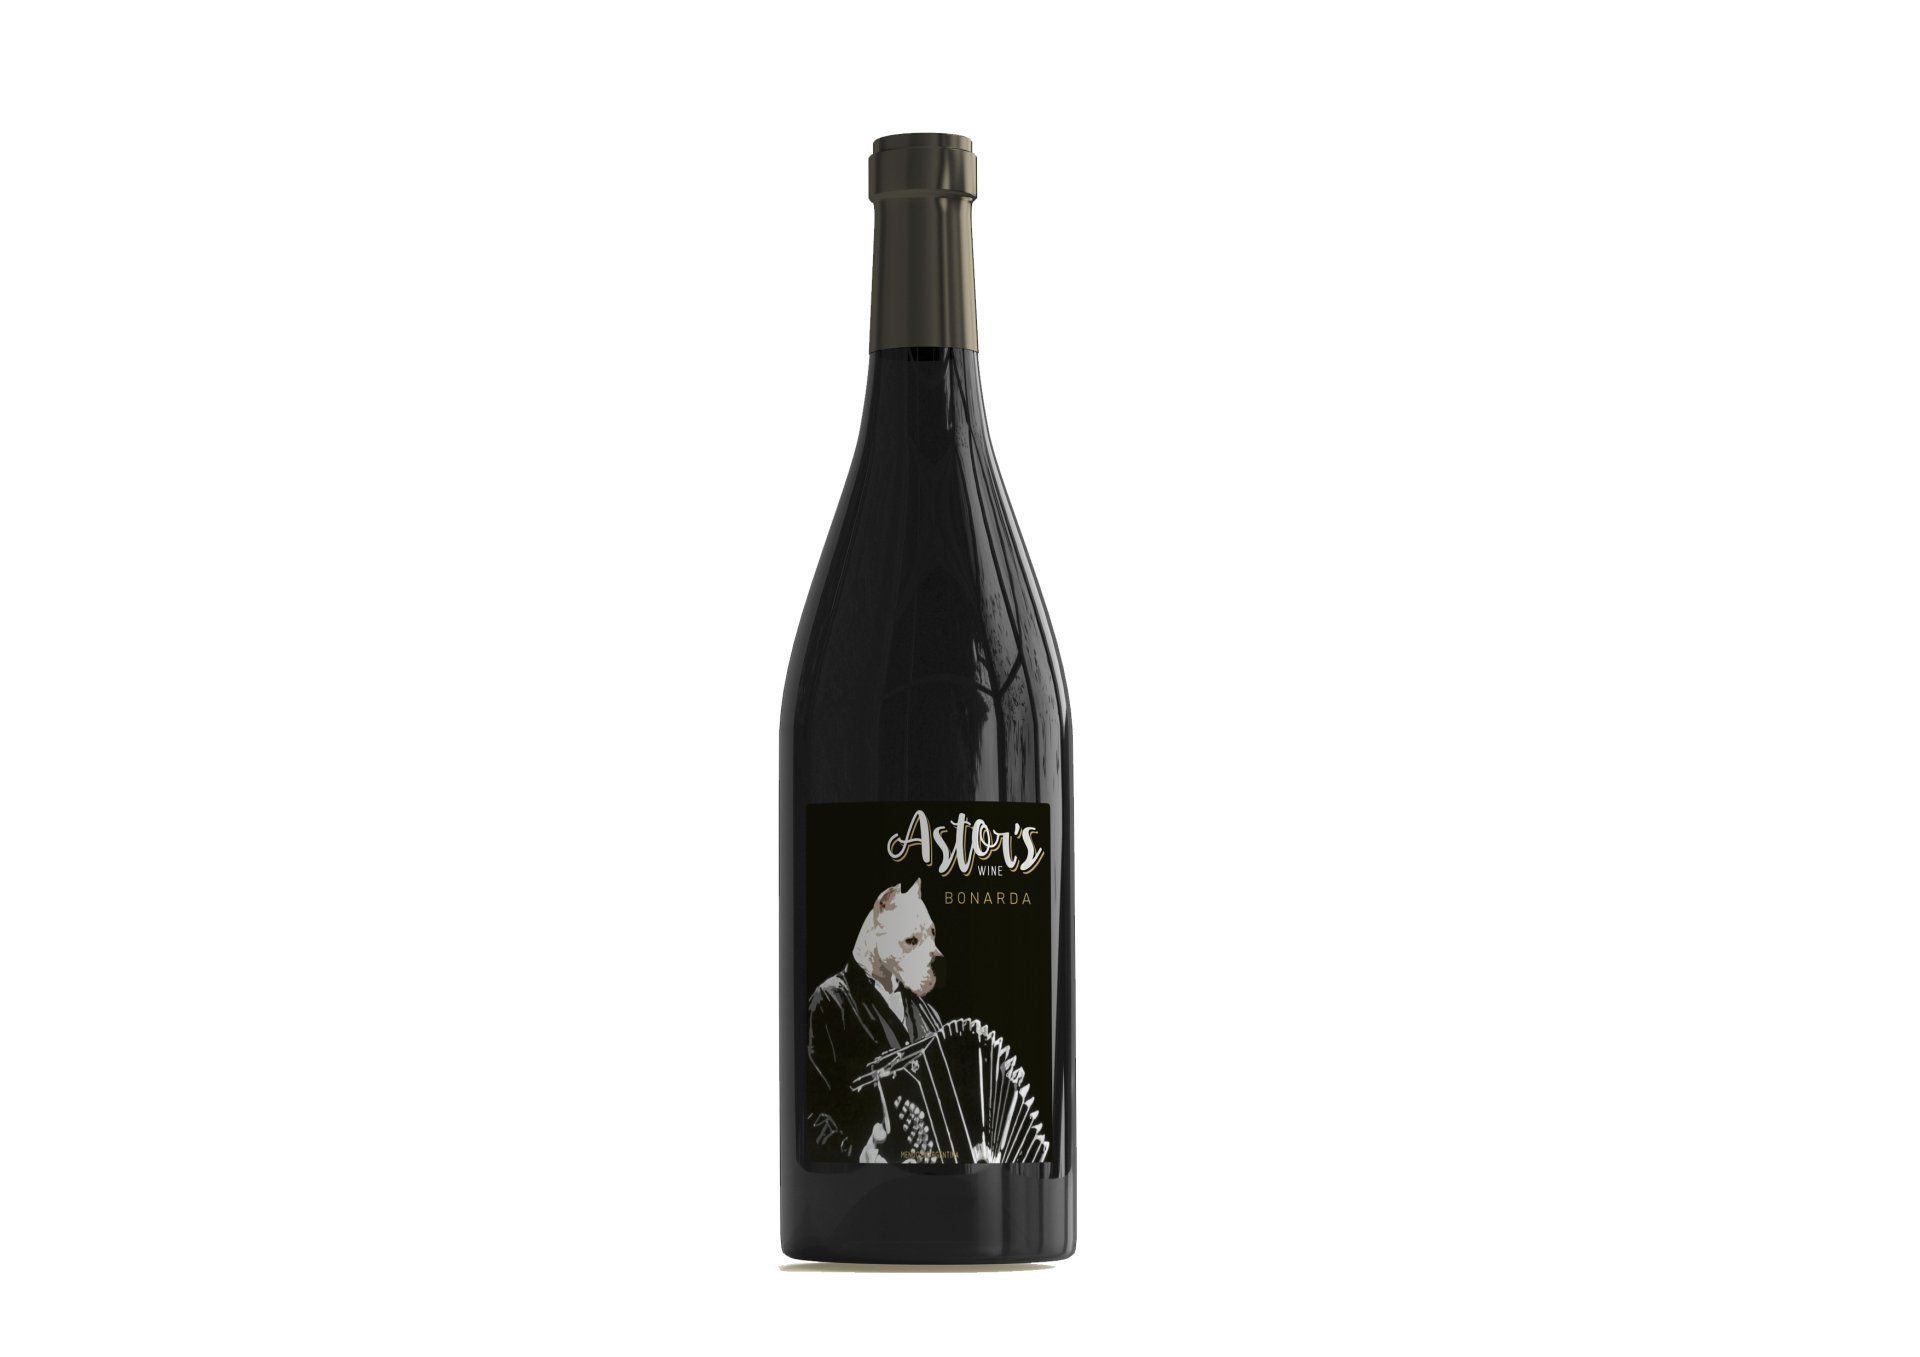 Astor's Red Wine Bonarda | Hangover street